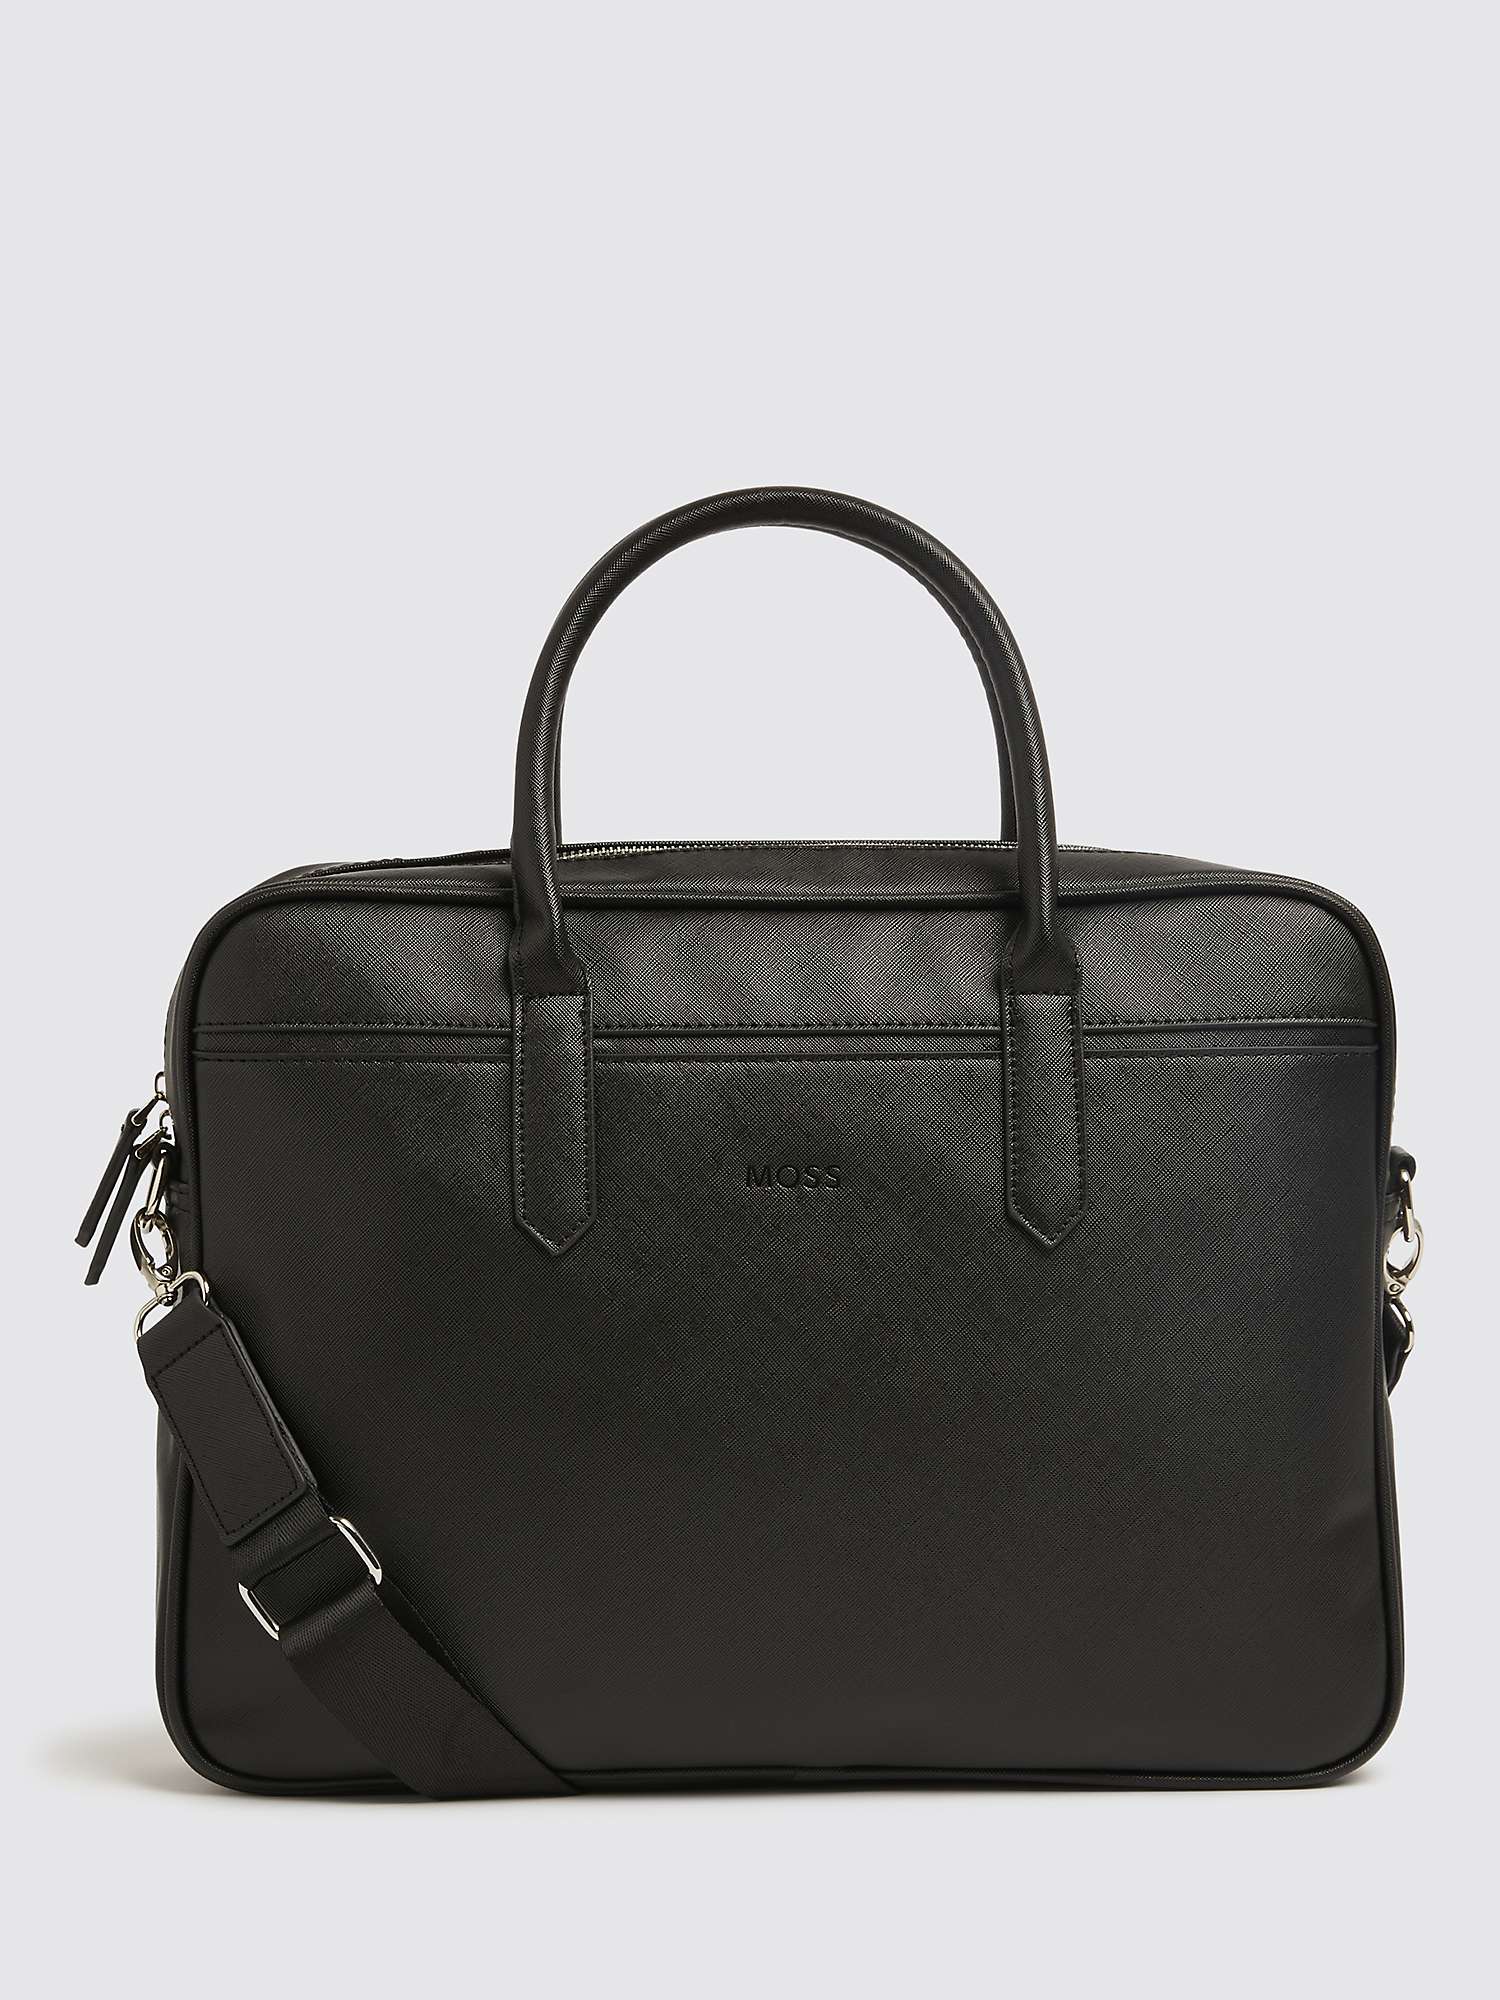 Buy Moss Saffiano Faux Leather Attache Bag, Black Online at johnlewis.com